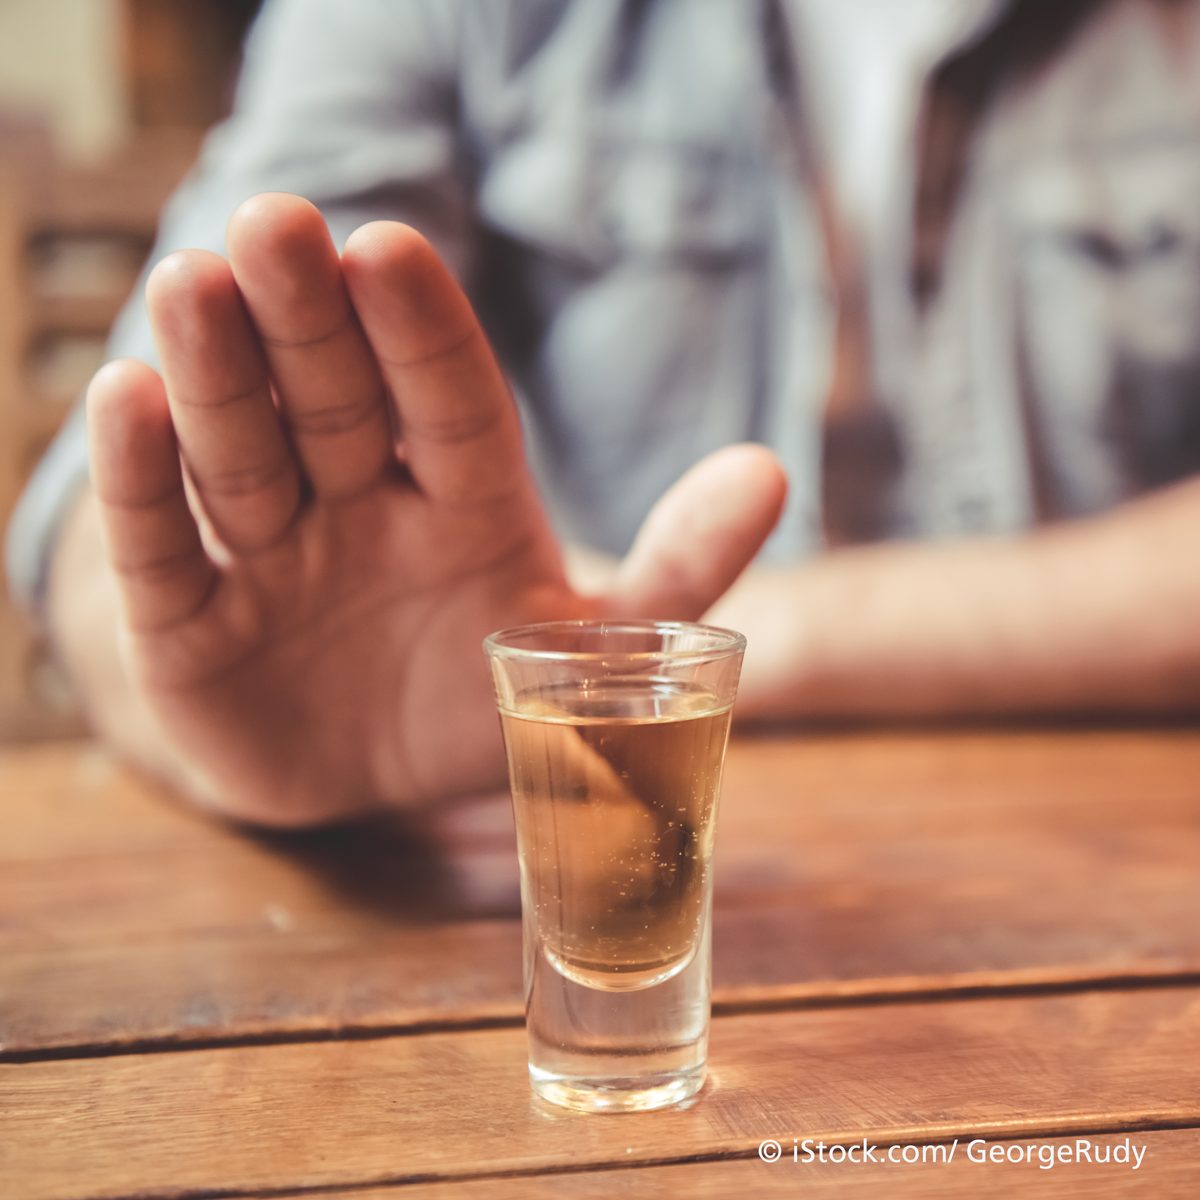 Risiko Alkohol: Was macht Alkohol im Körper?